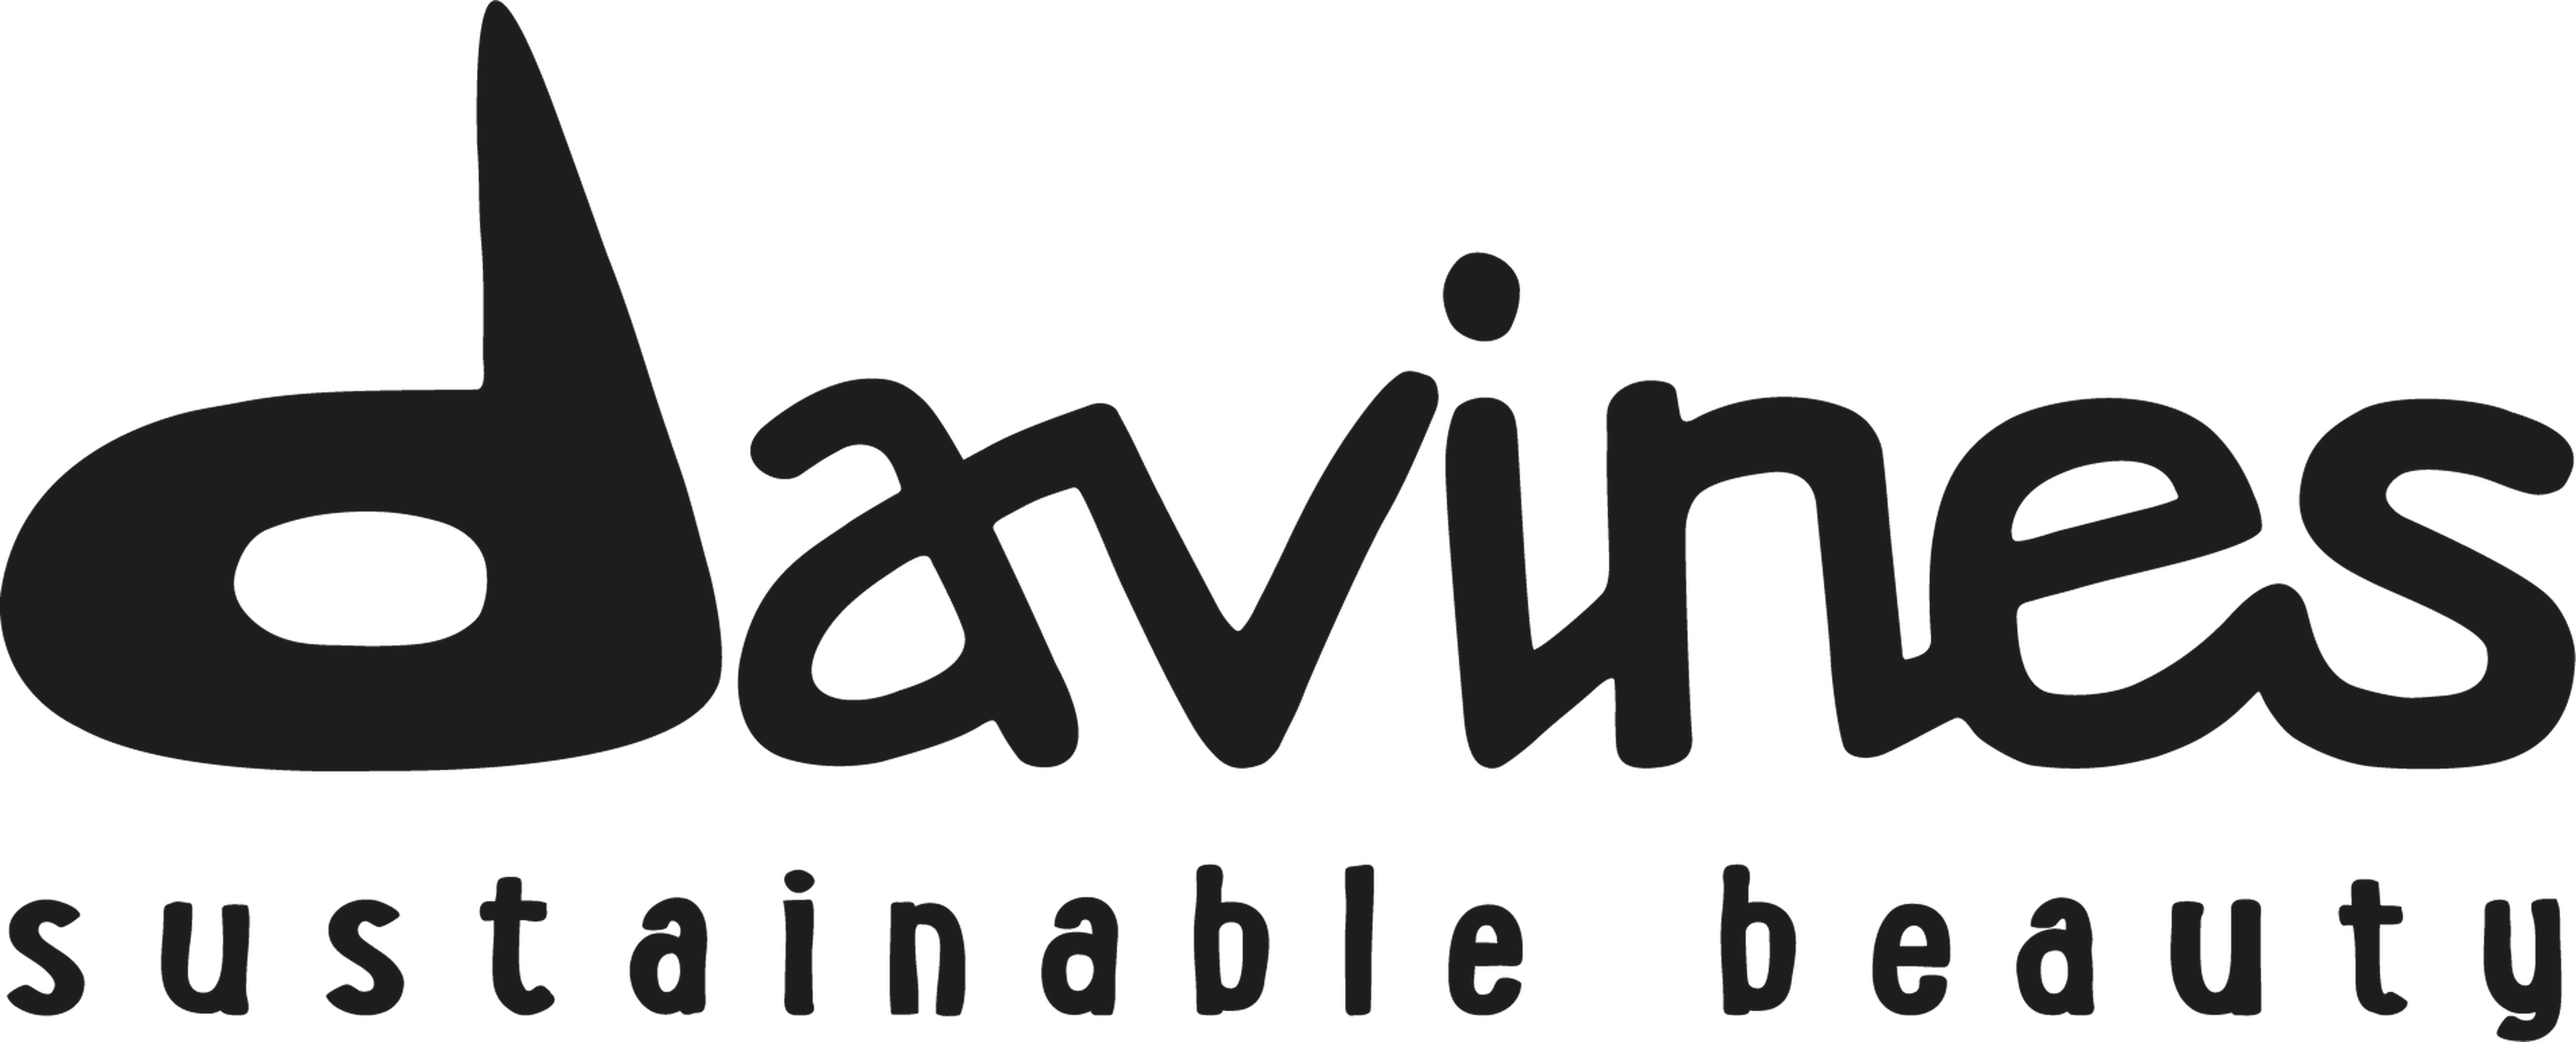 Davines logotype